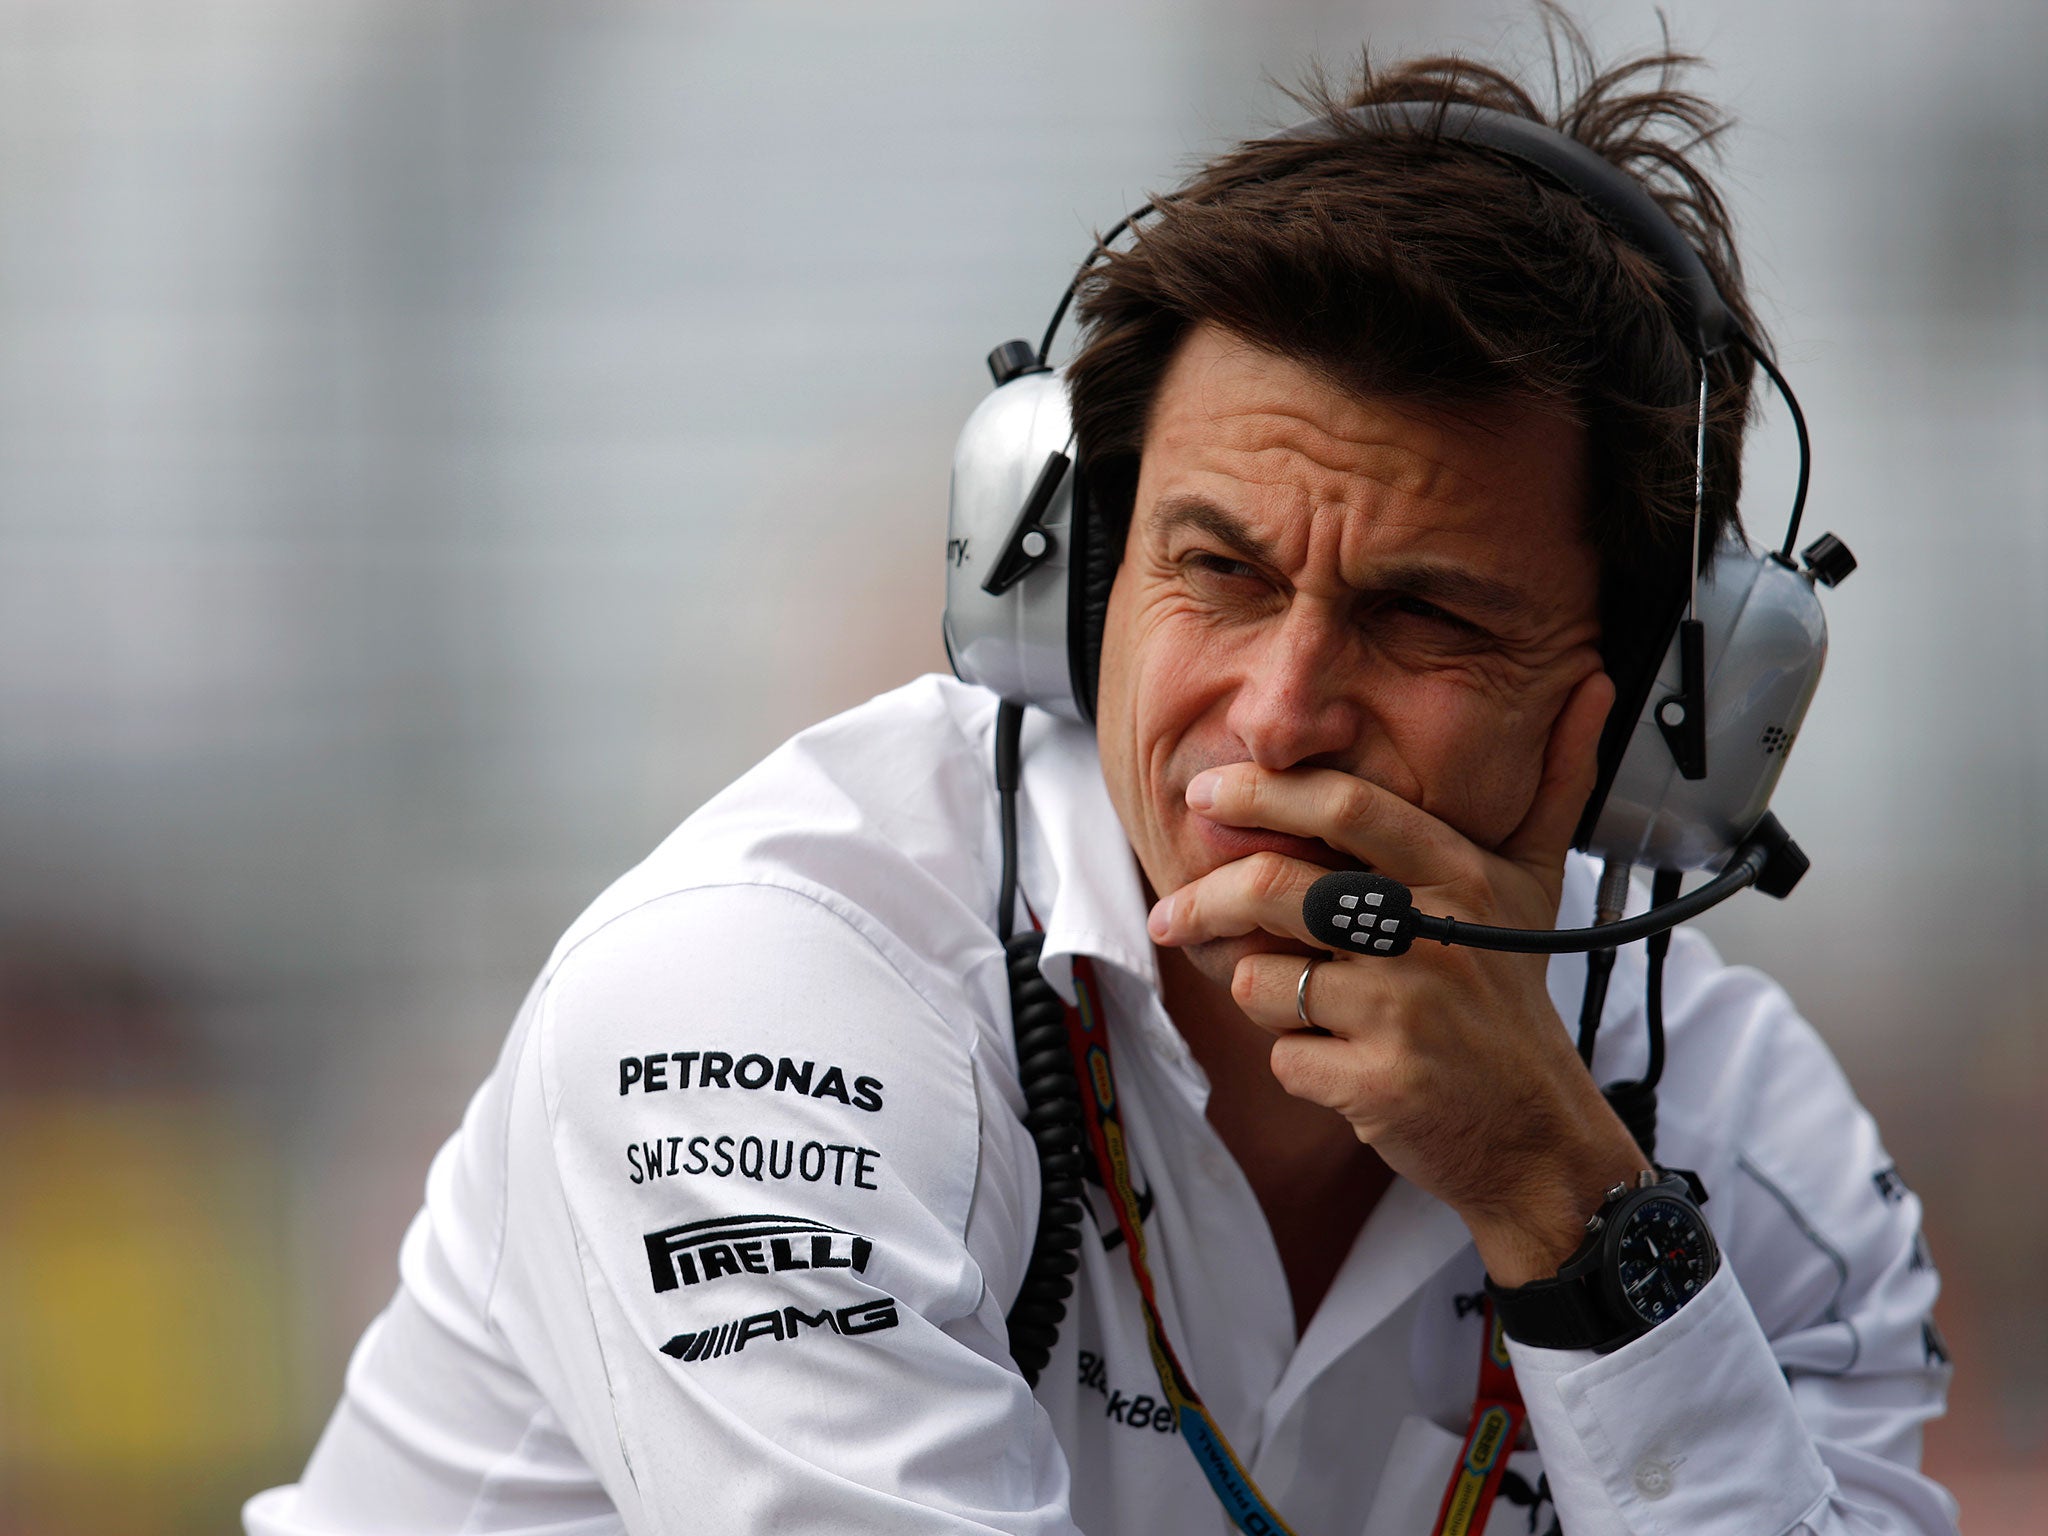 Mercedes motorsport boss Toto Wolff